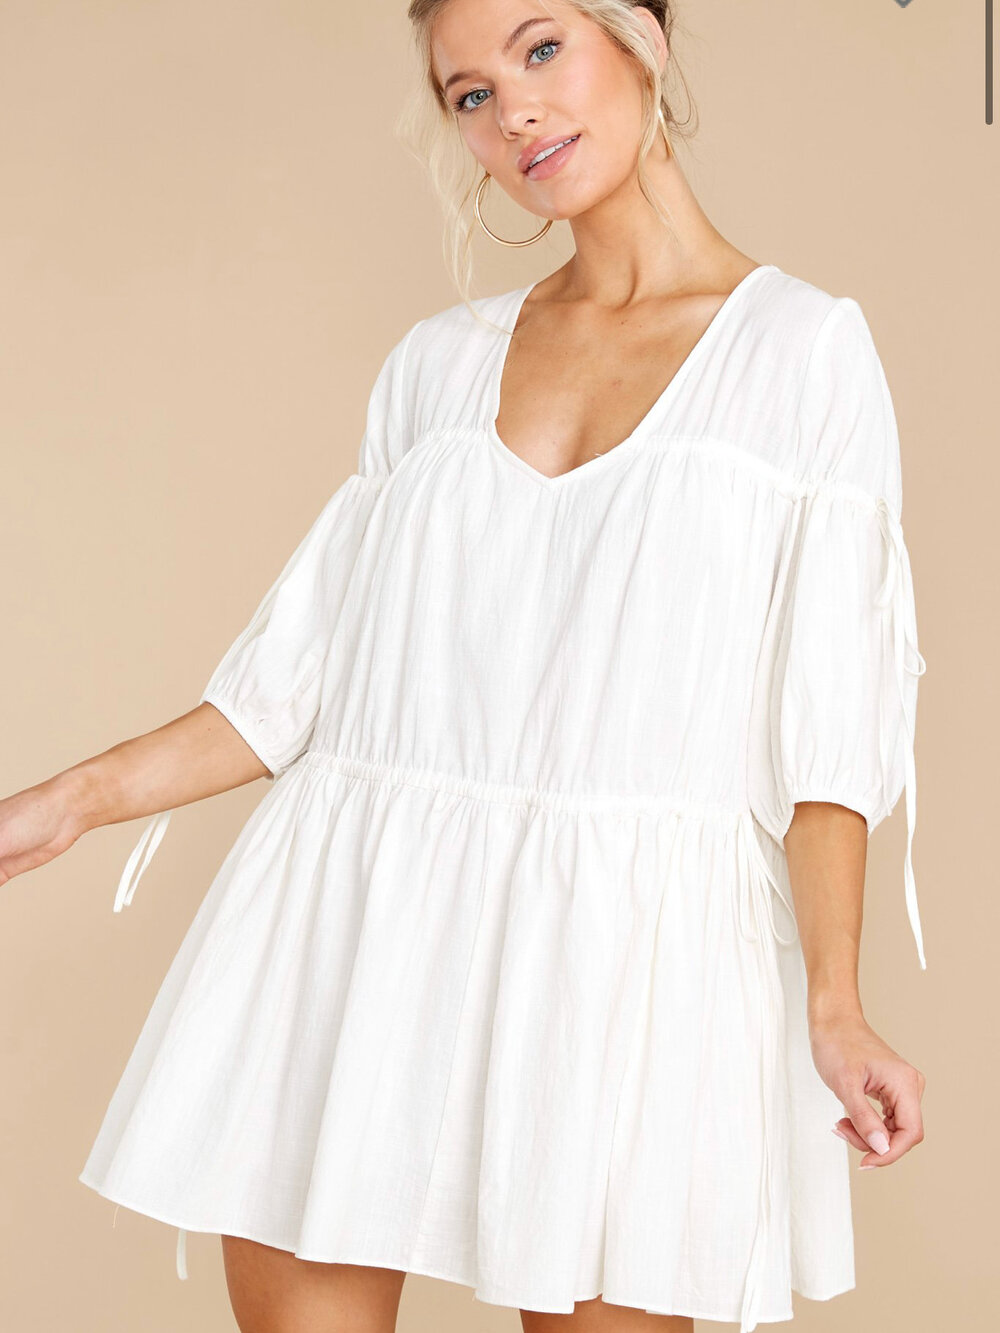 16 White Summer Dresses - Engagement Party Dresses, Bridal Shower ...